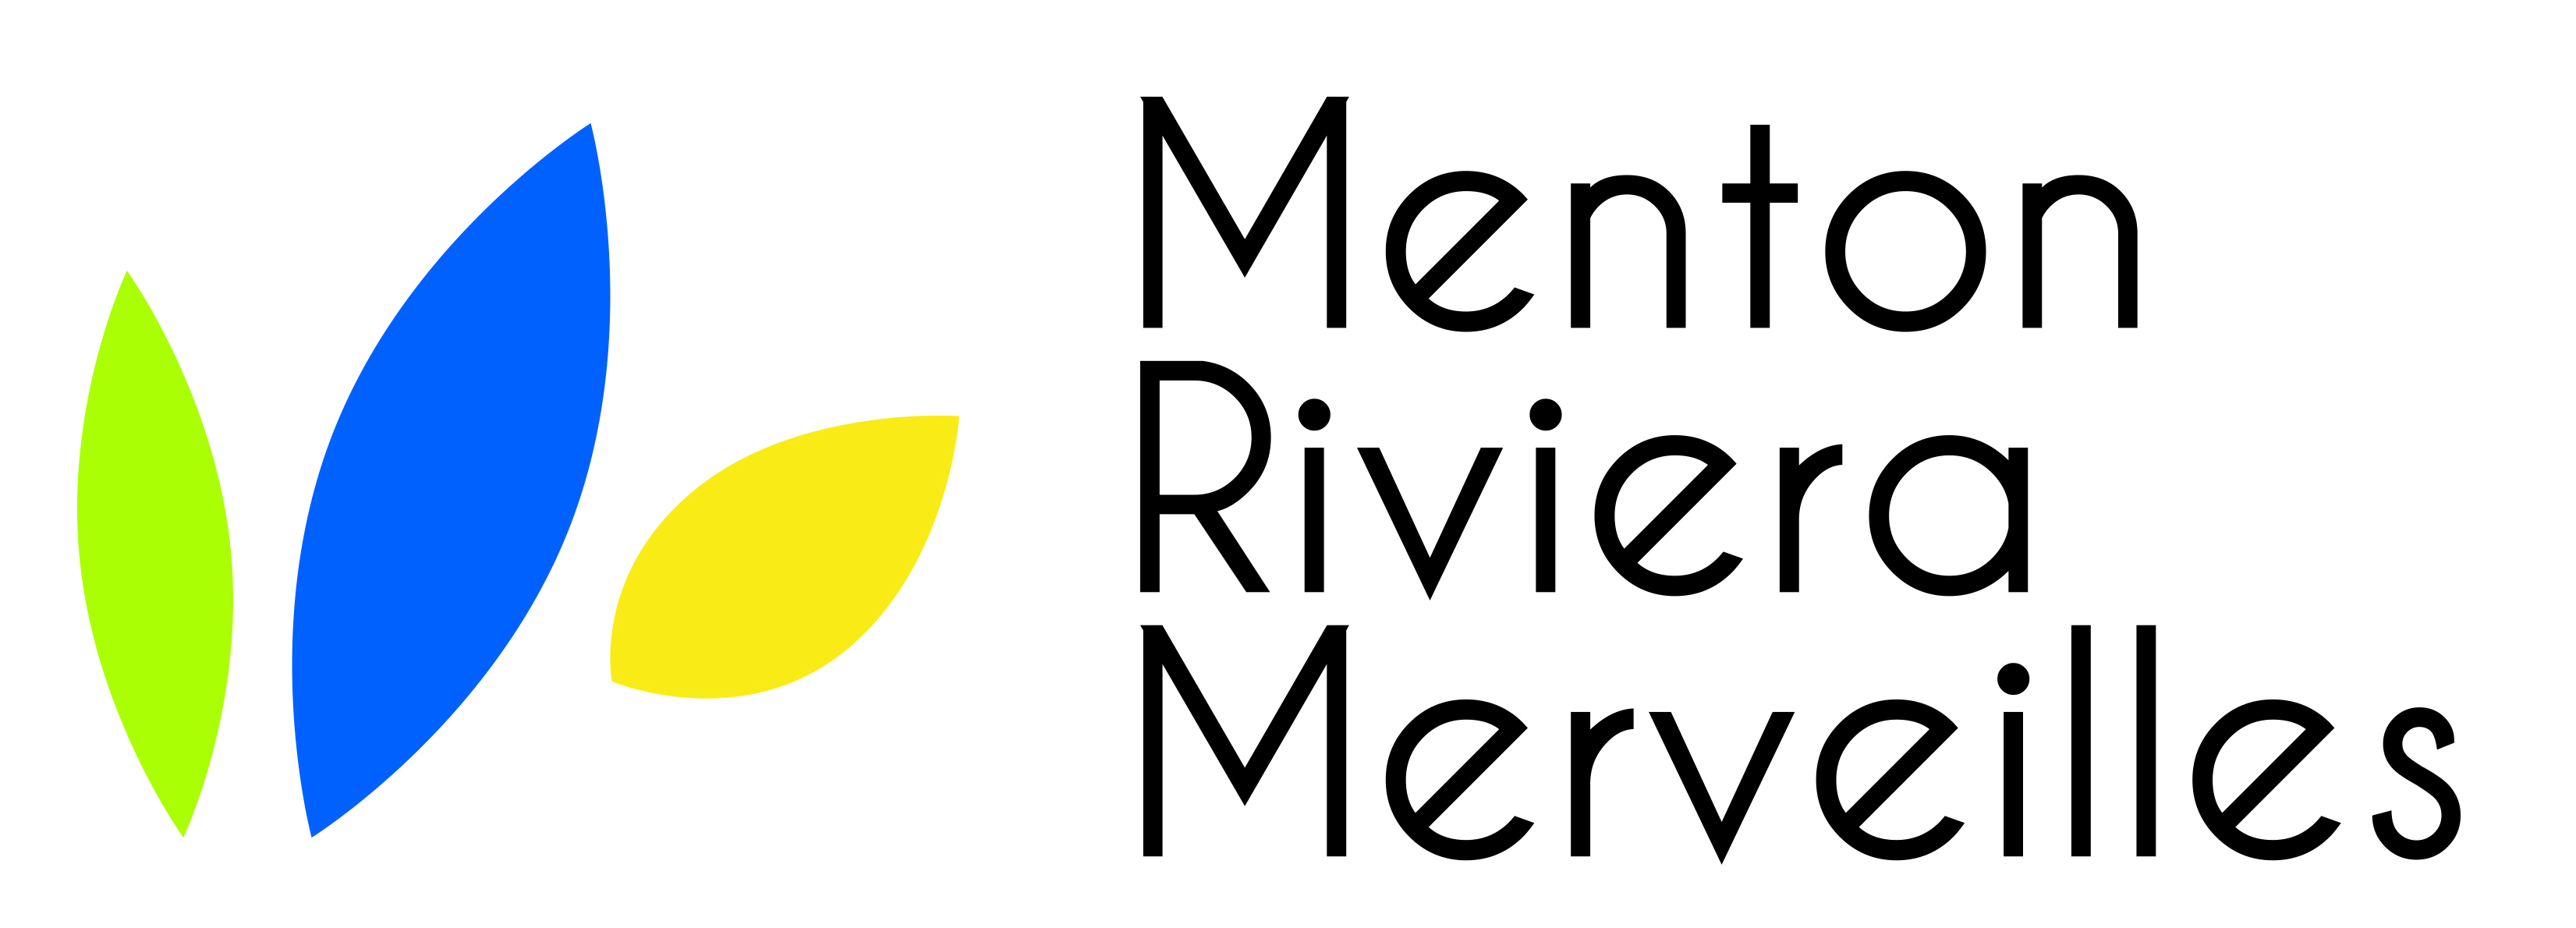 Menton, Riviera & Merveilles